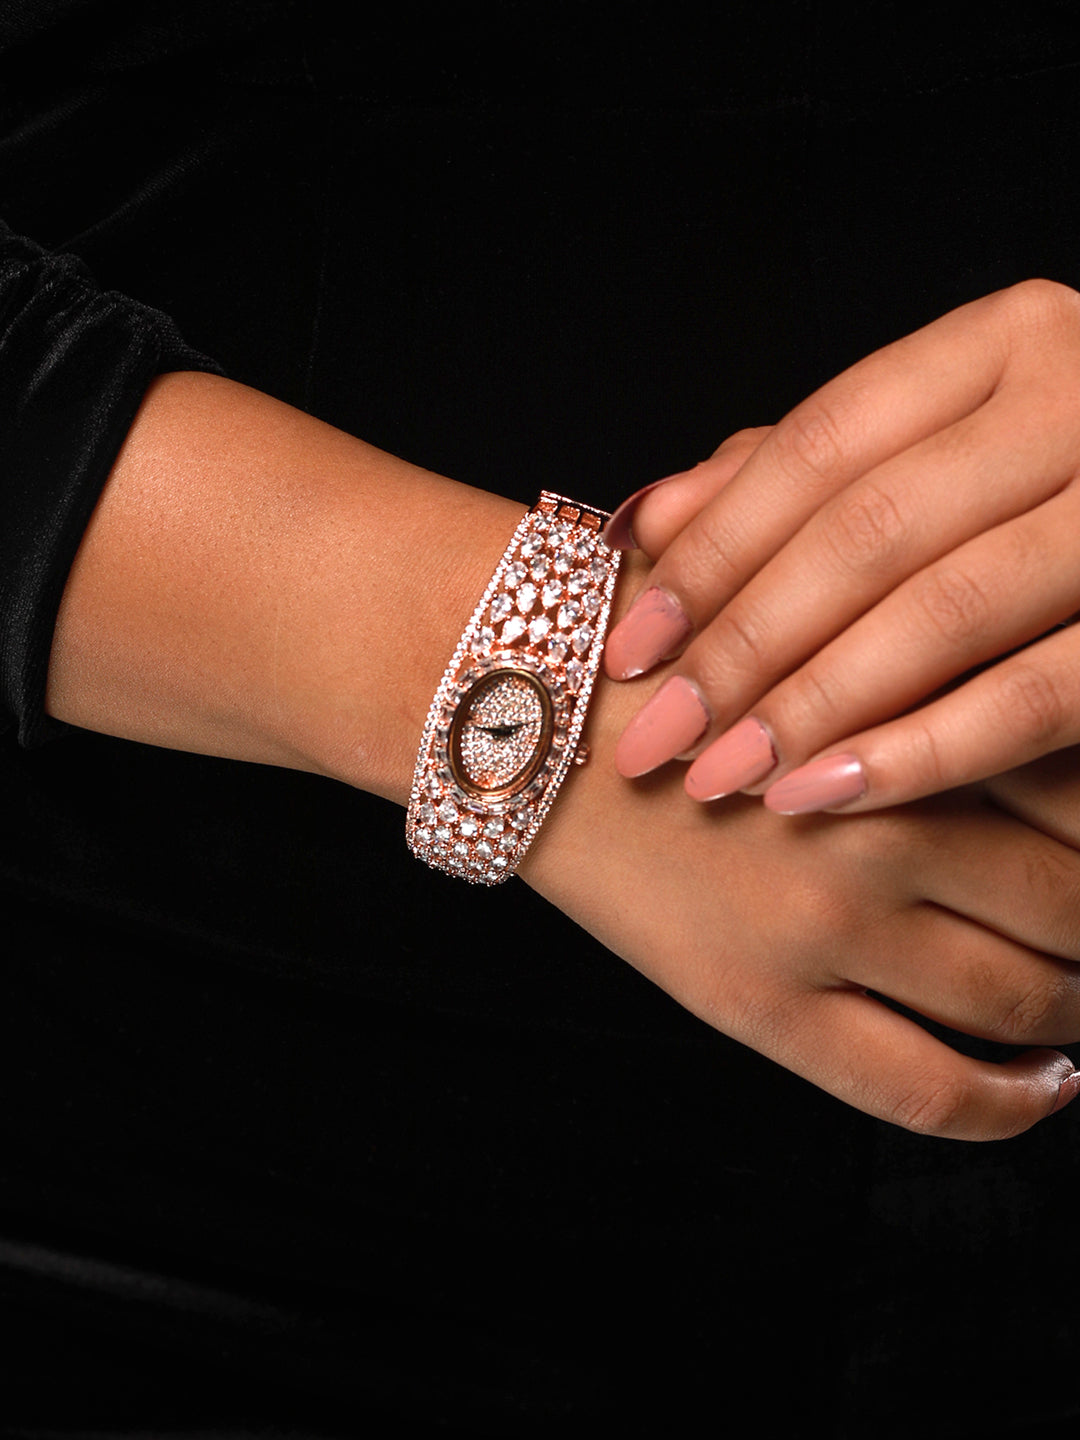 Designer American Diamond Rose Gold-Plated Bracelet Watch